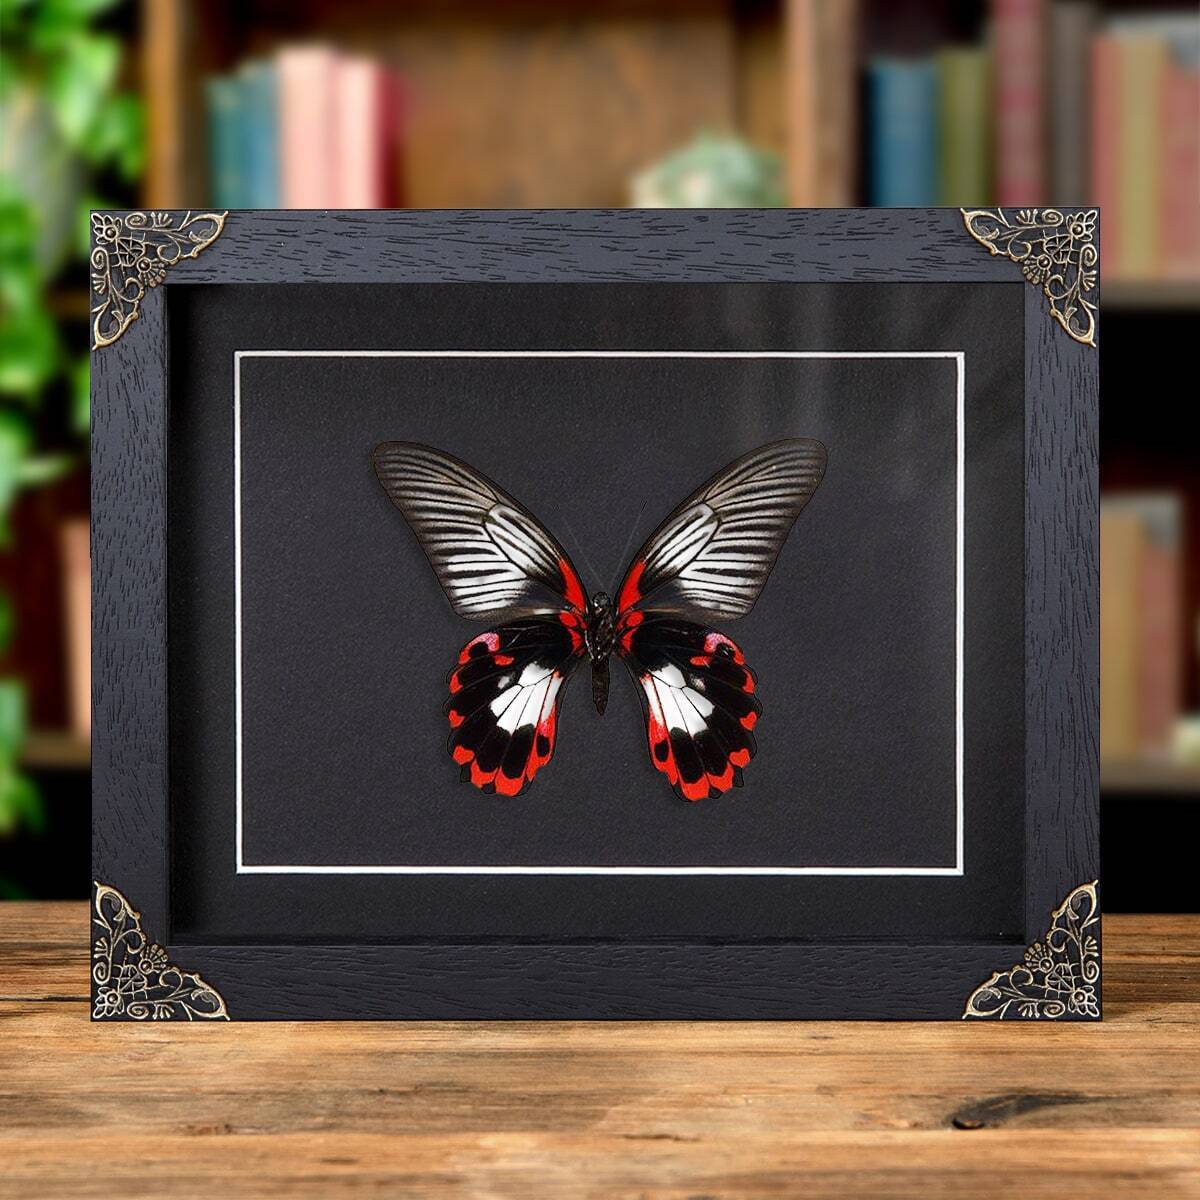 Taxidermy Scarlet Mormon White Form in Baroque Style Frame (Papilio rumanzovia)